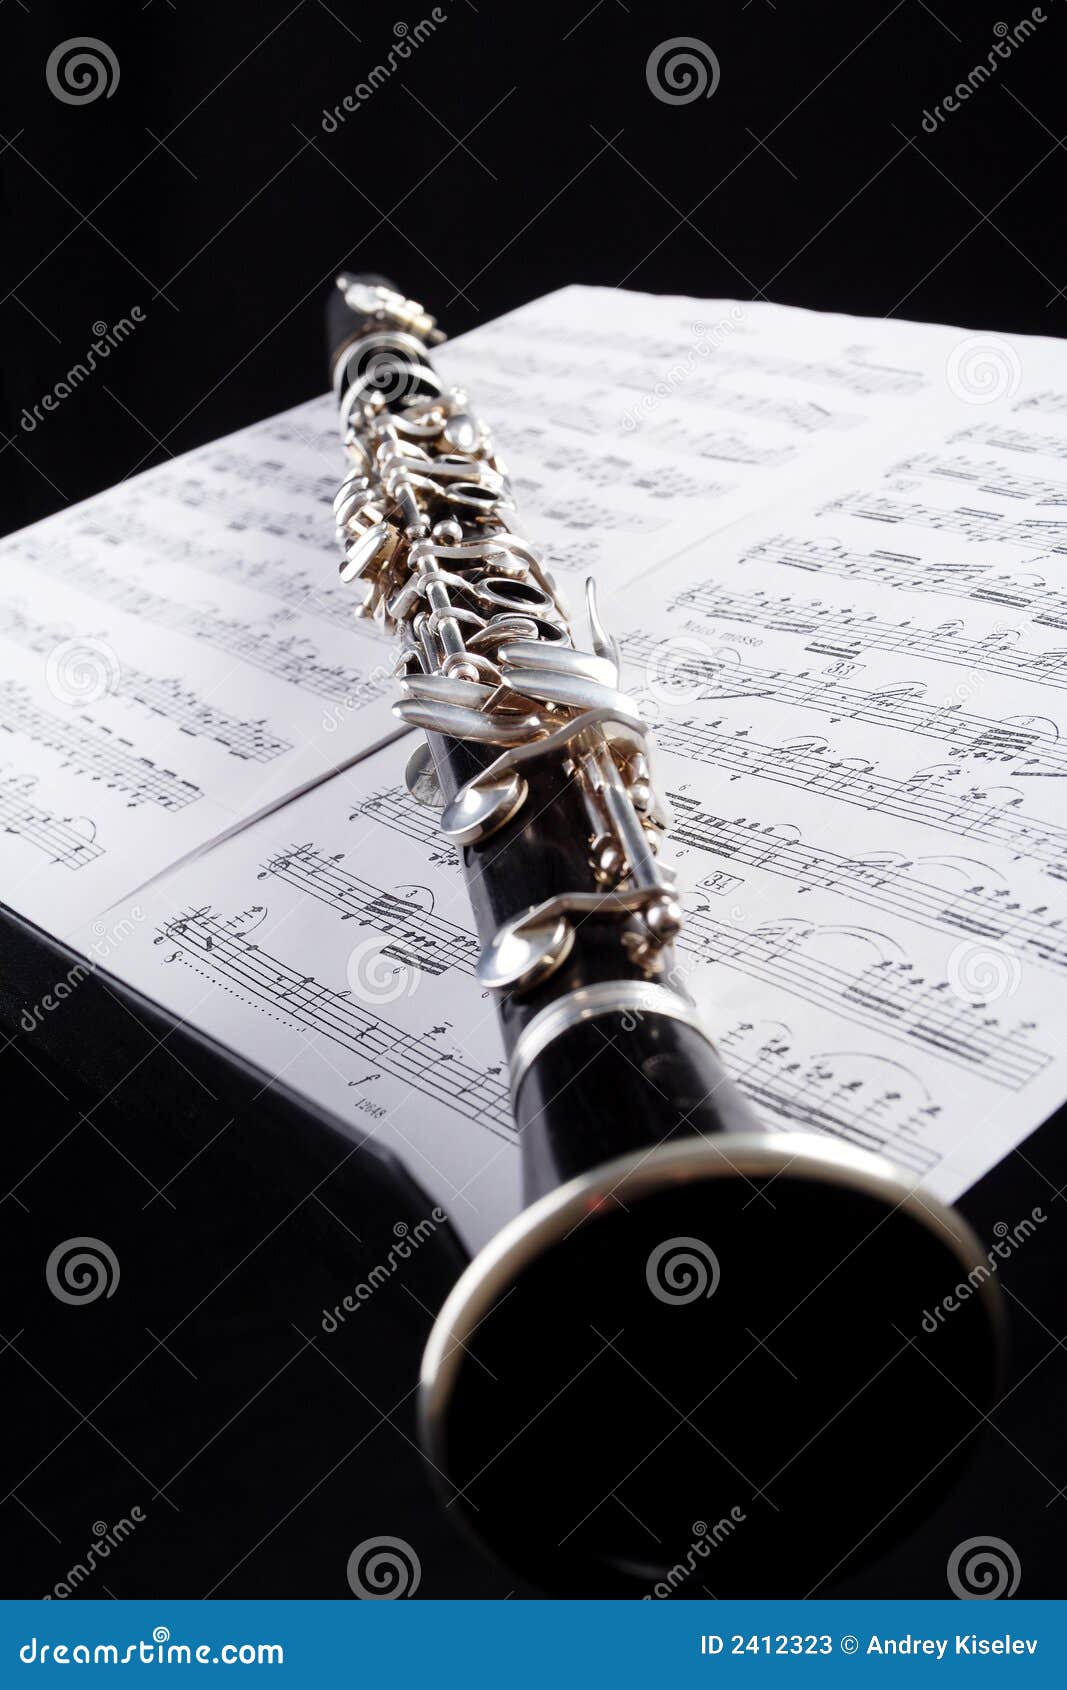 122 Clarinet Alto Photos Free Royalty Free Stock Photos From Dreamstime